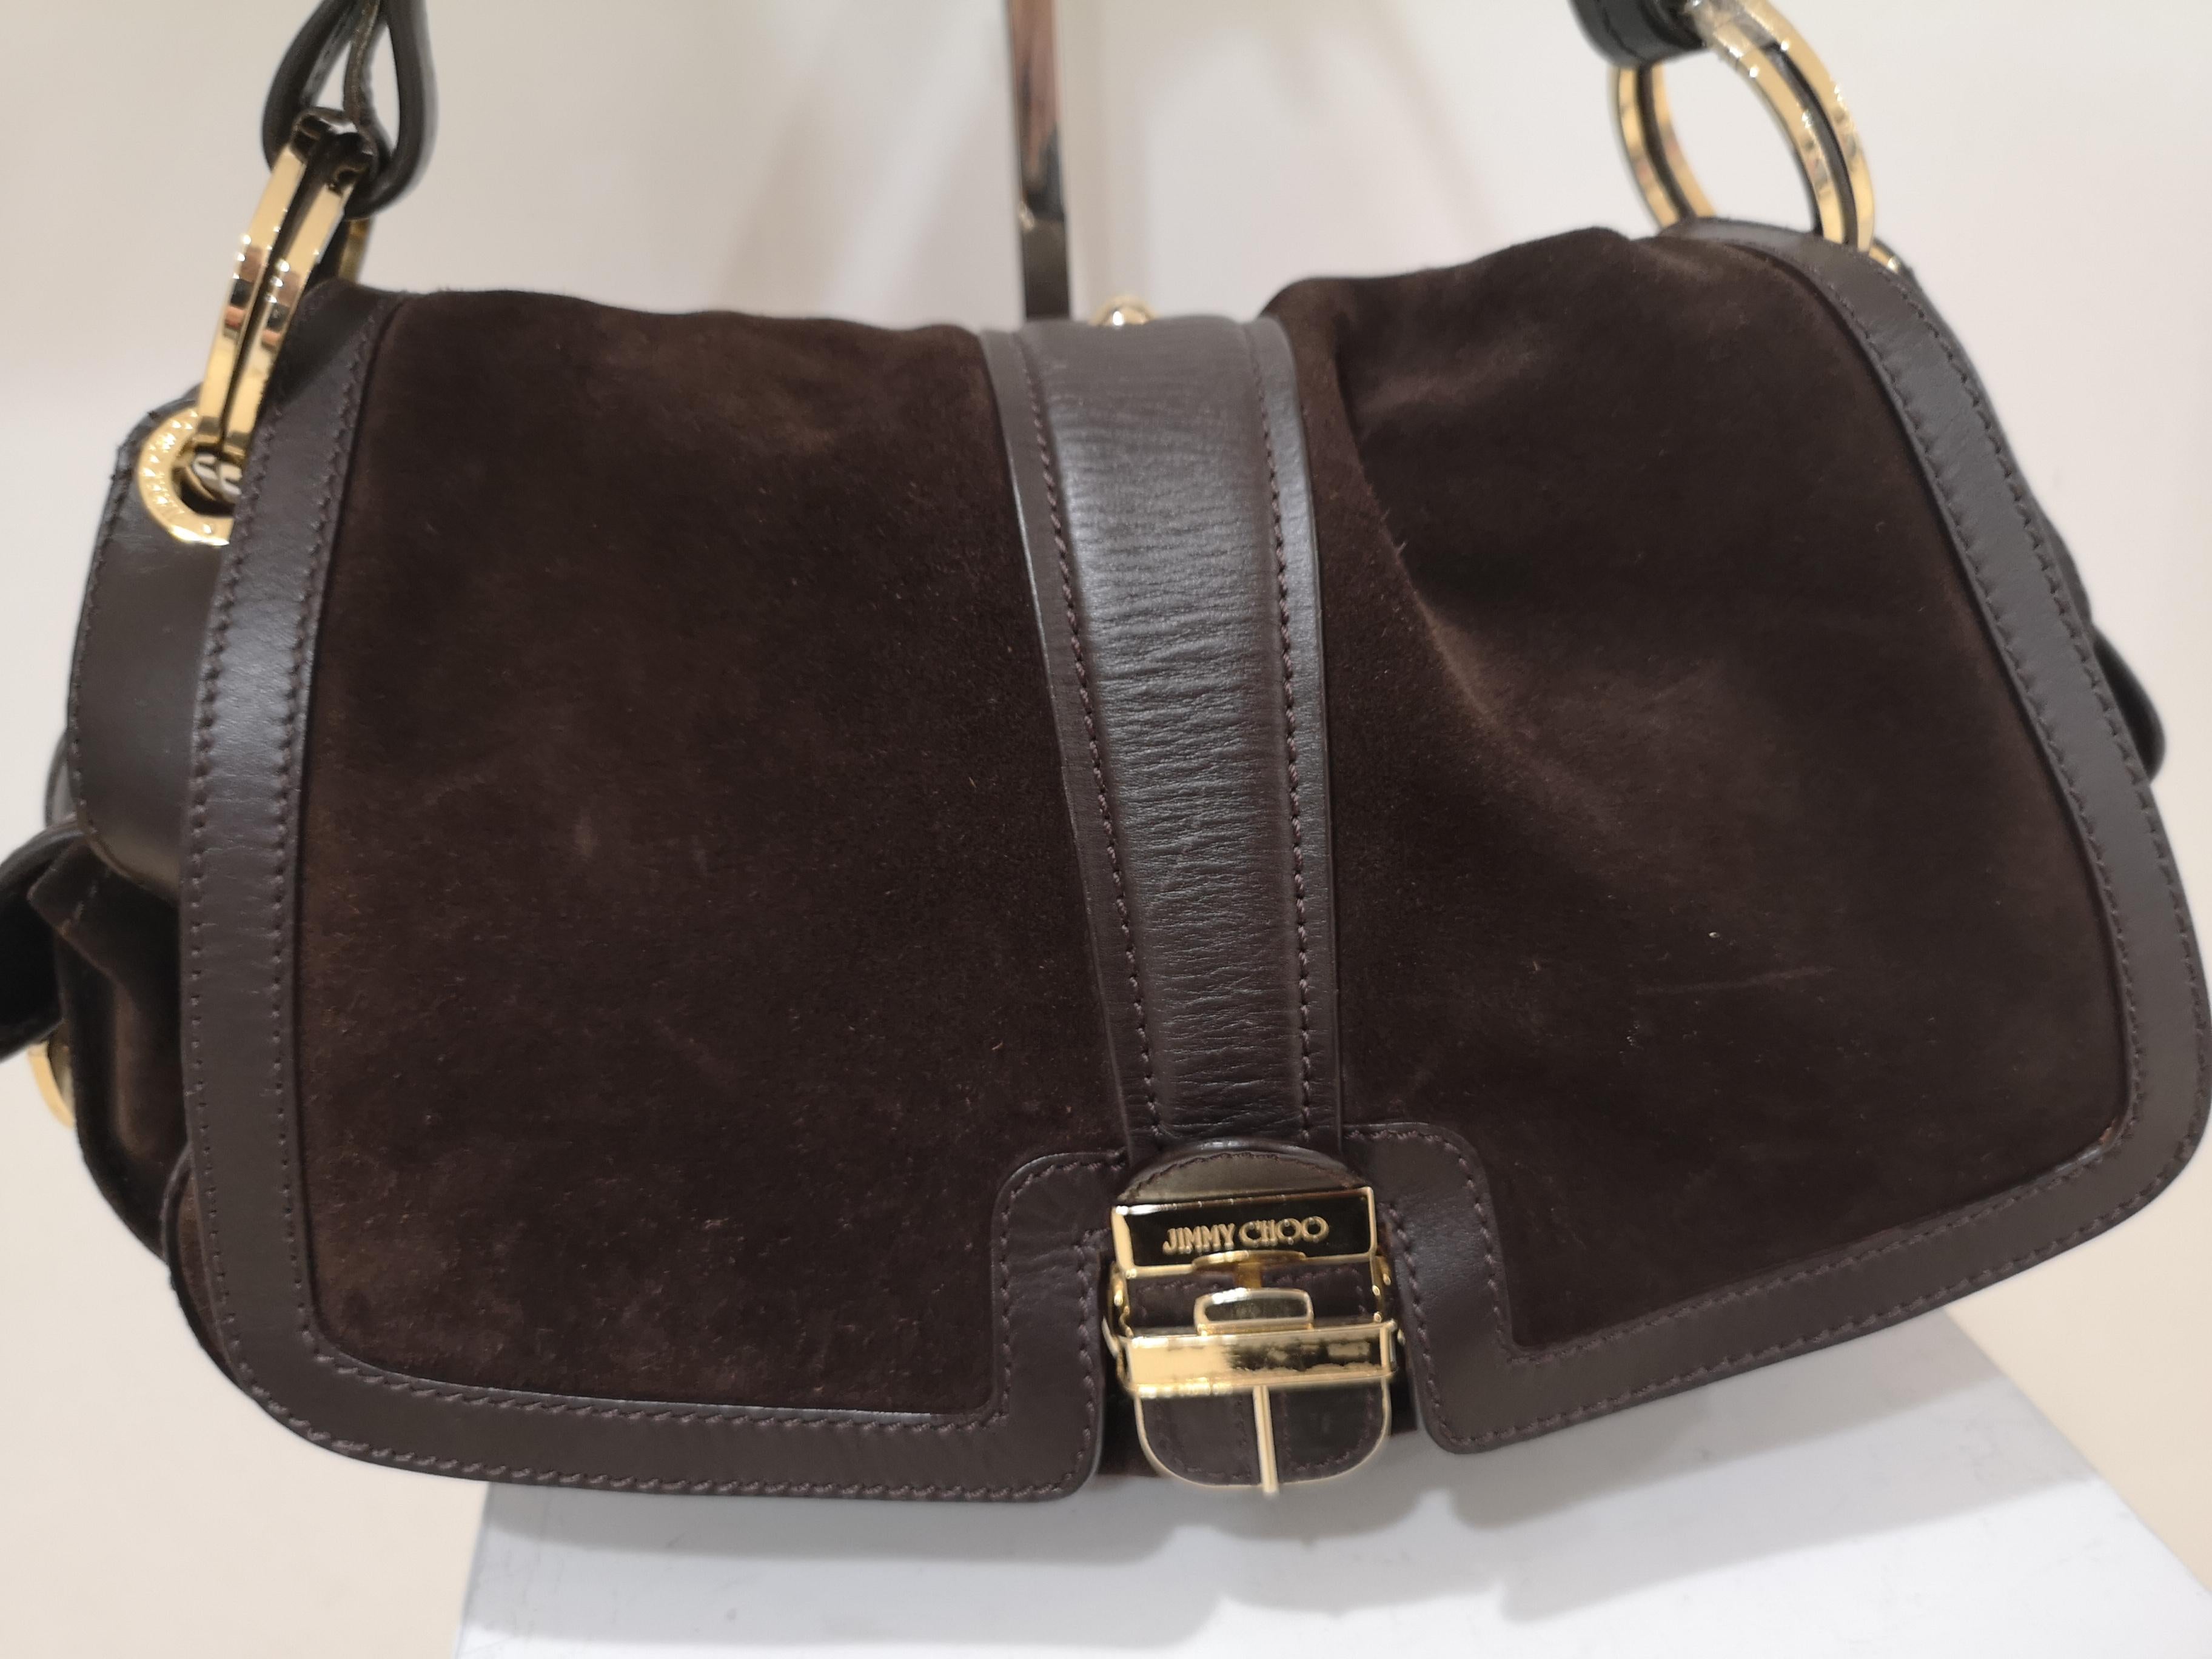 Jimmy Choo brown suede and leather handle shoulder bag 1